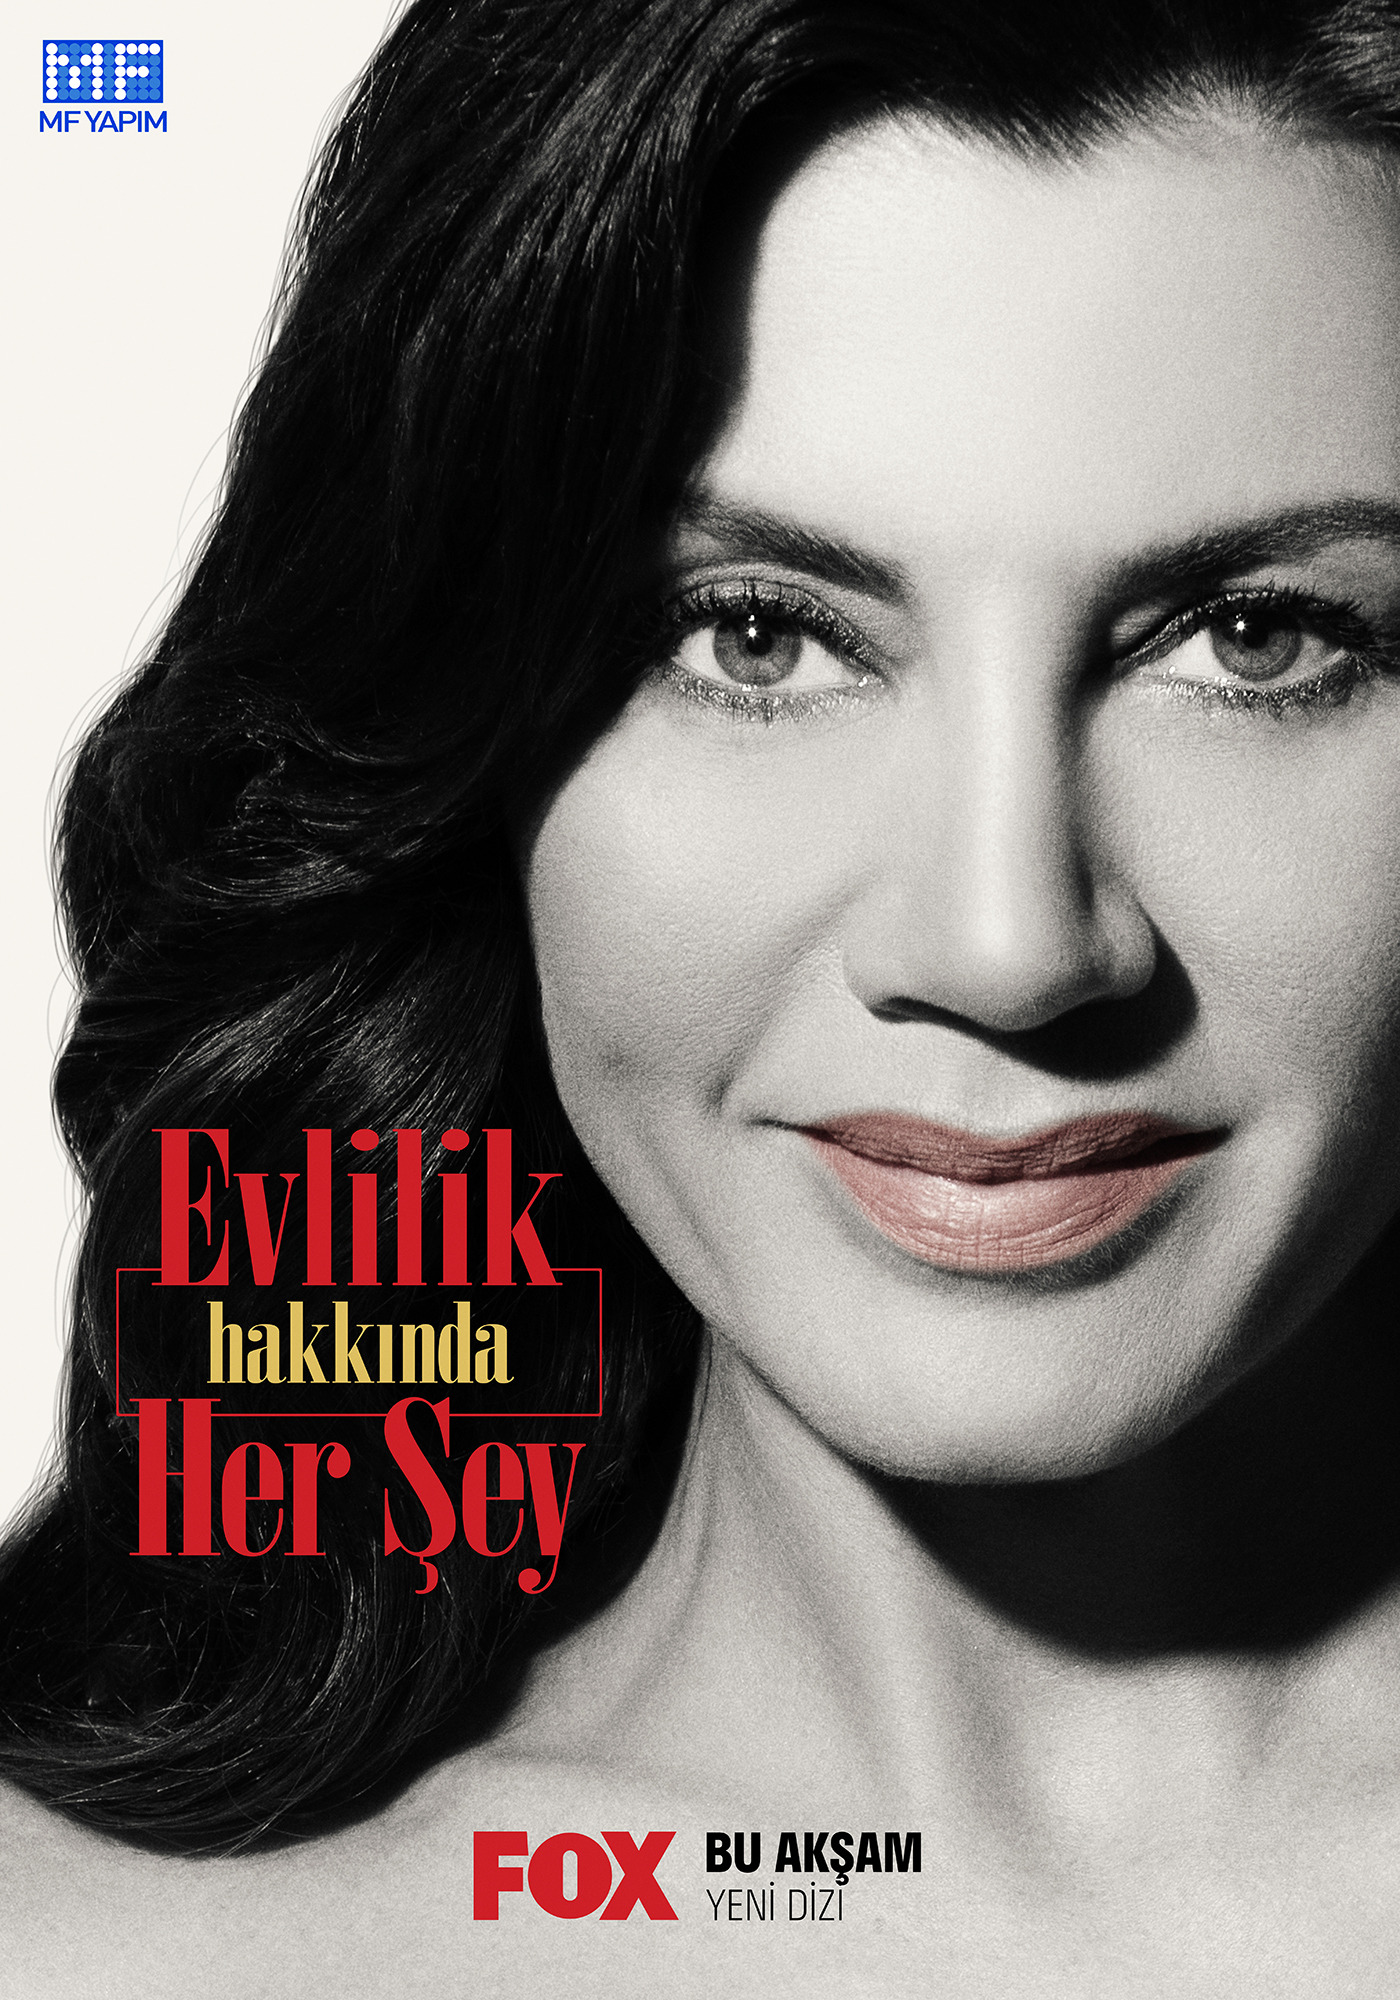 Mega Sized TV Poster Image for Evlilik Hakkinda Her Sey (#2 of 2)